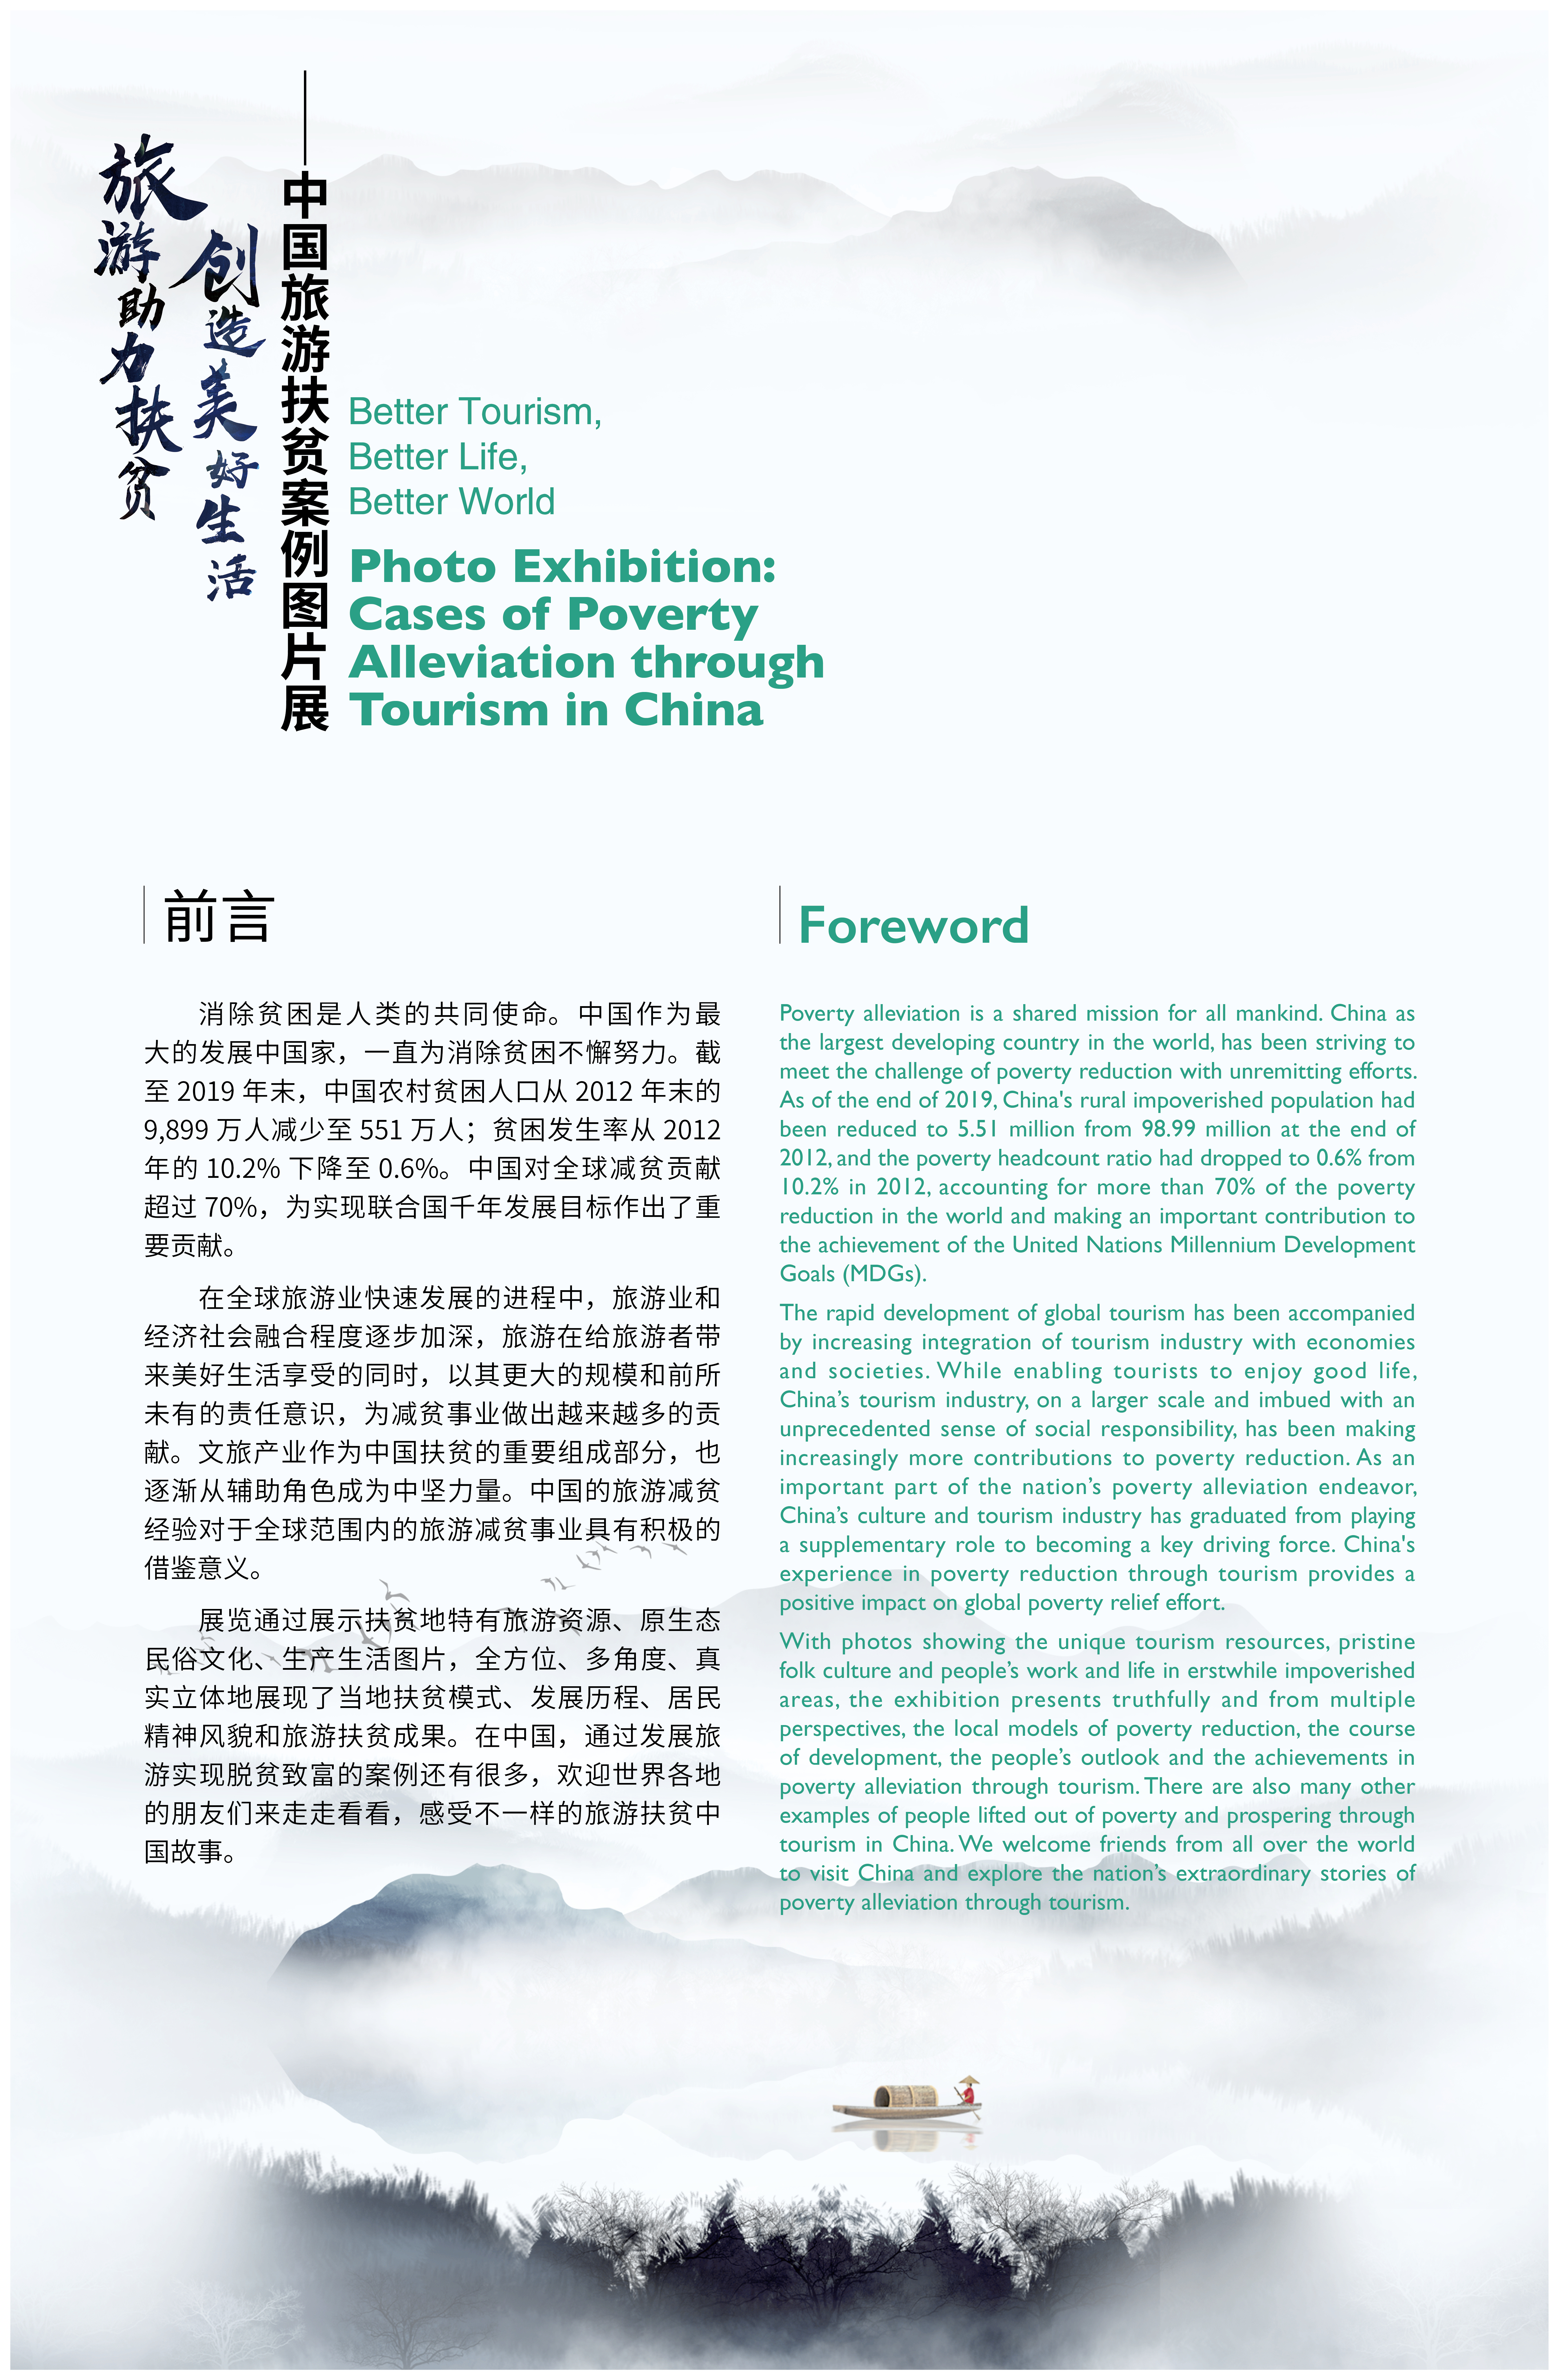 旅游助力扶贫 创造美好生活——中国旅游扶贫案例图片展 | Photo Exhibition: Cases of Poverty Alleviation through Tourism in China